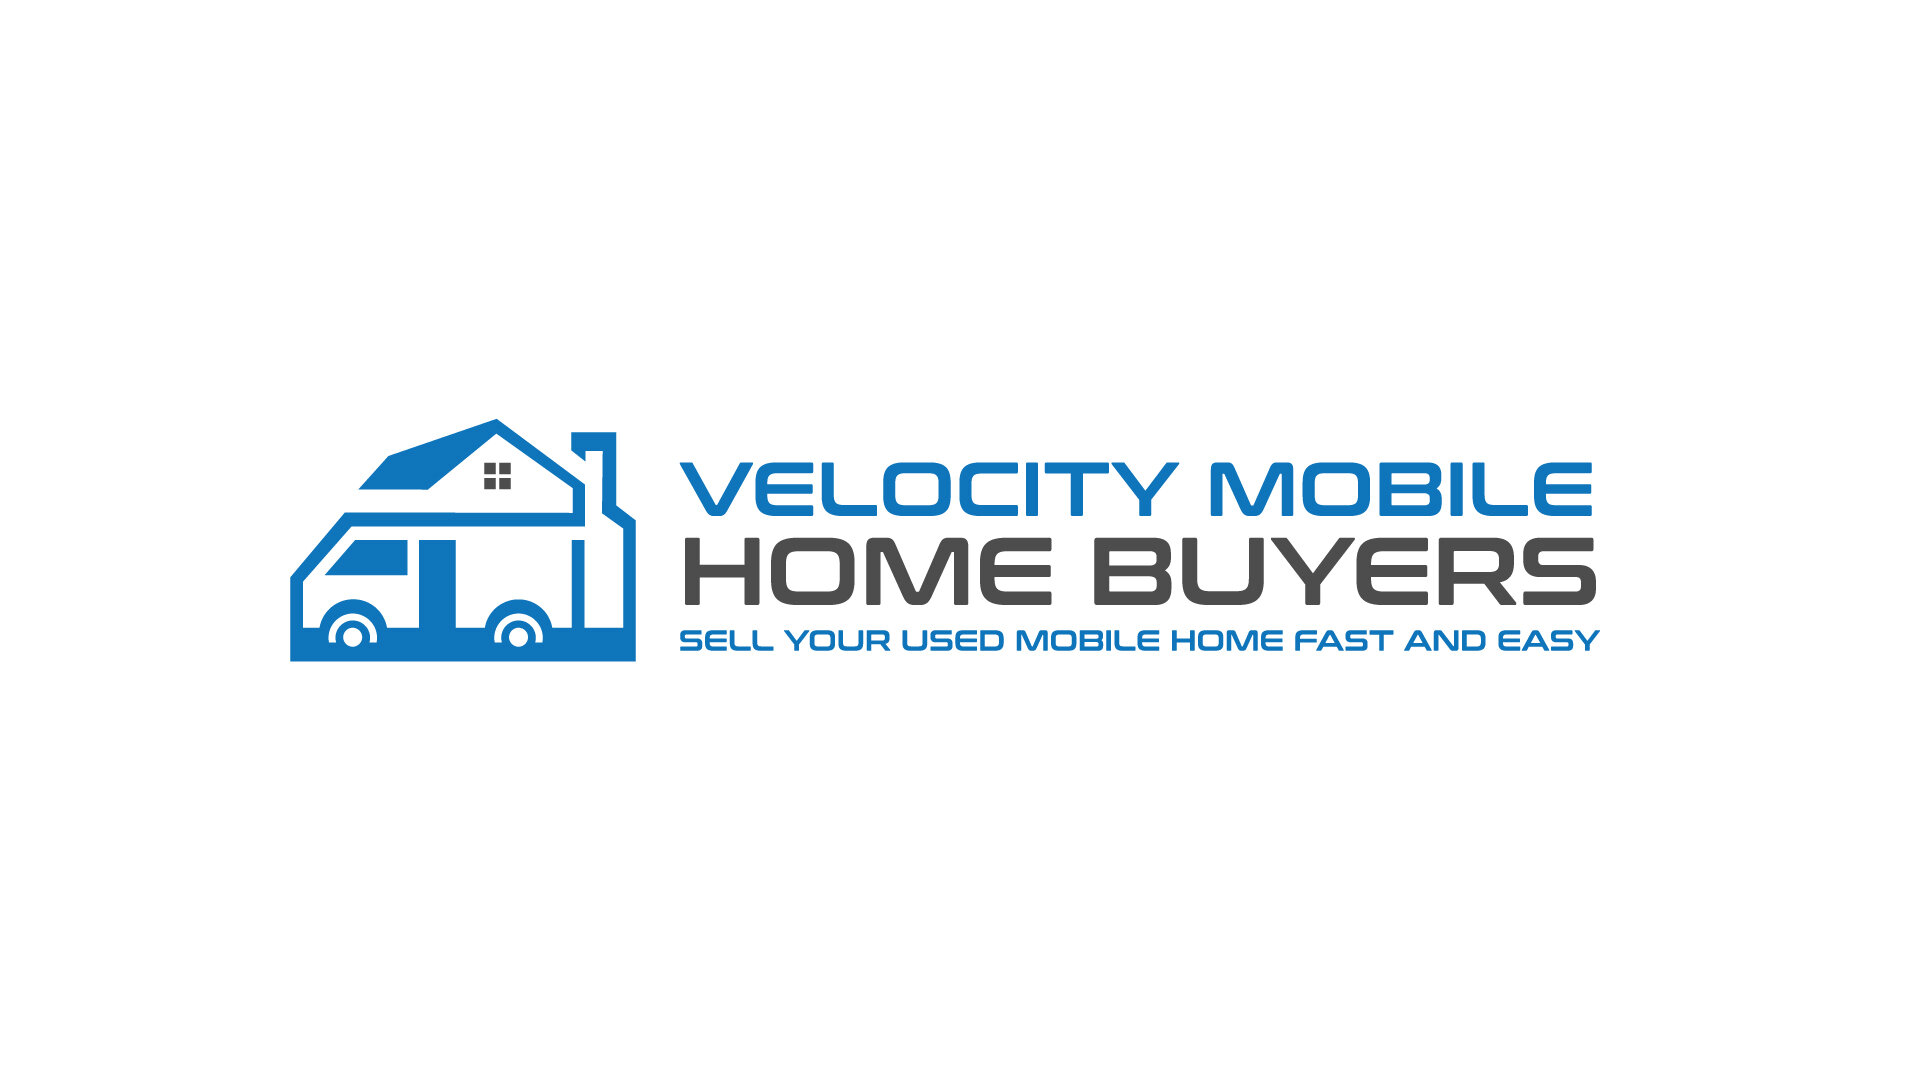 Velocity Mobile Home Buyers logo